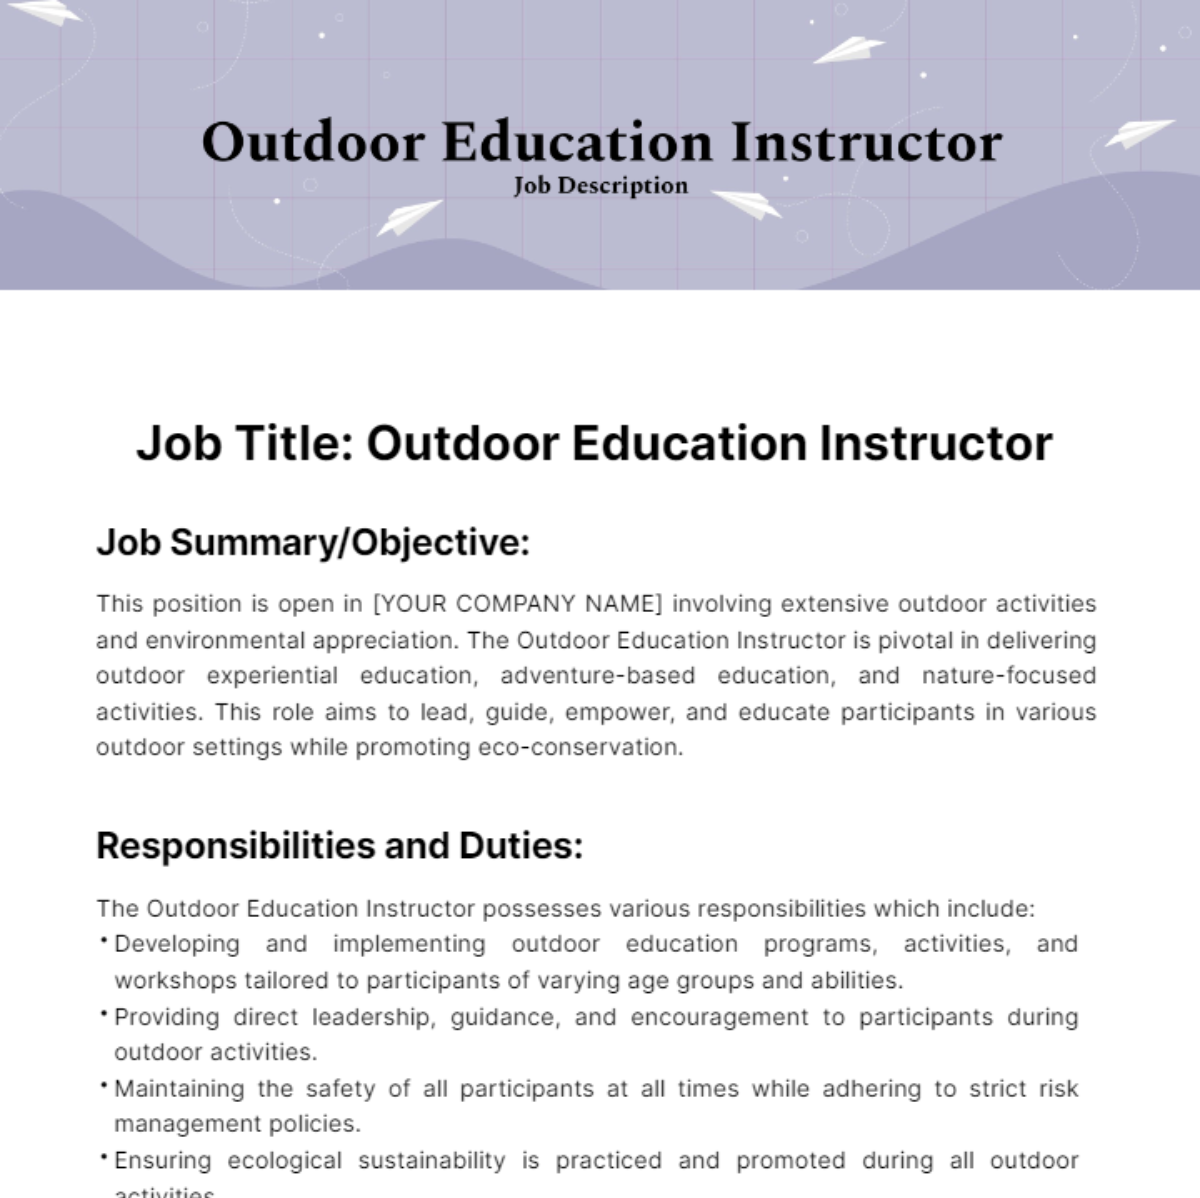 Outdoor Education Instructor Job Description Template